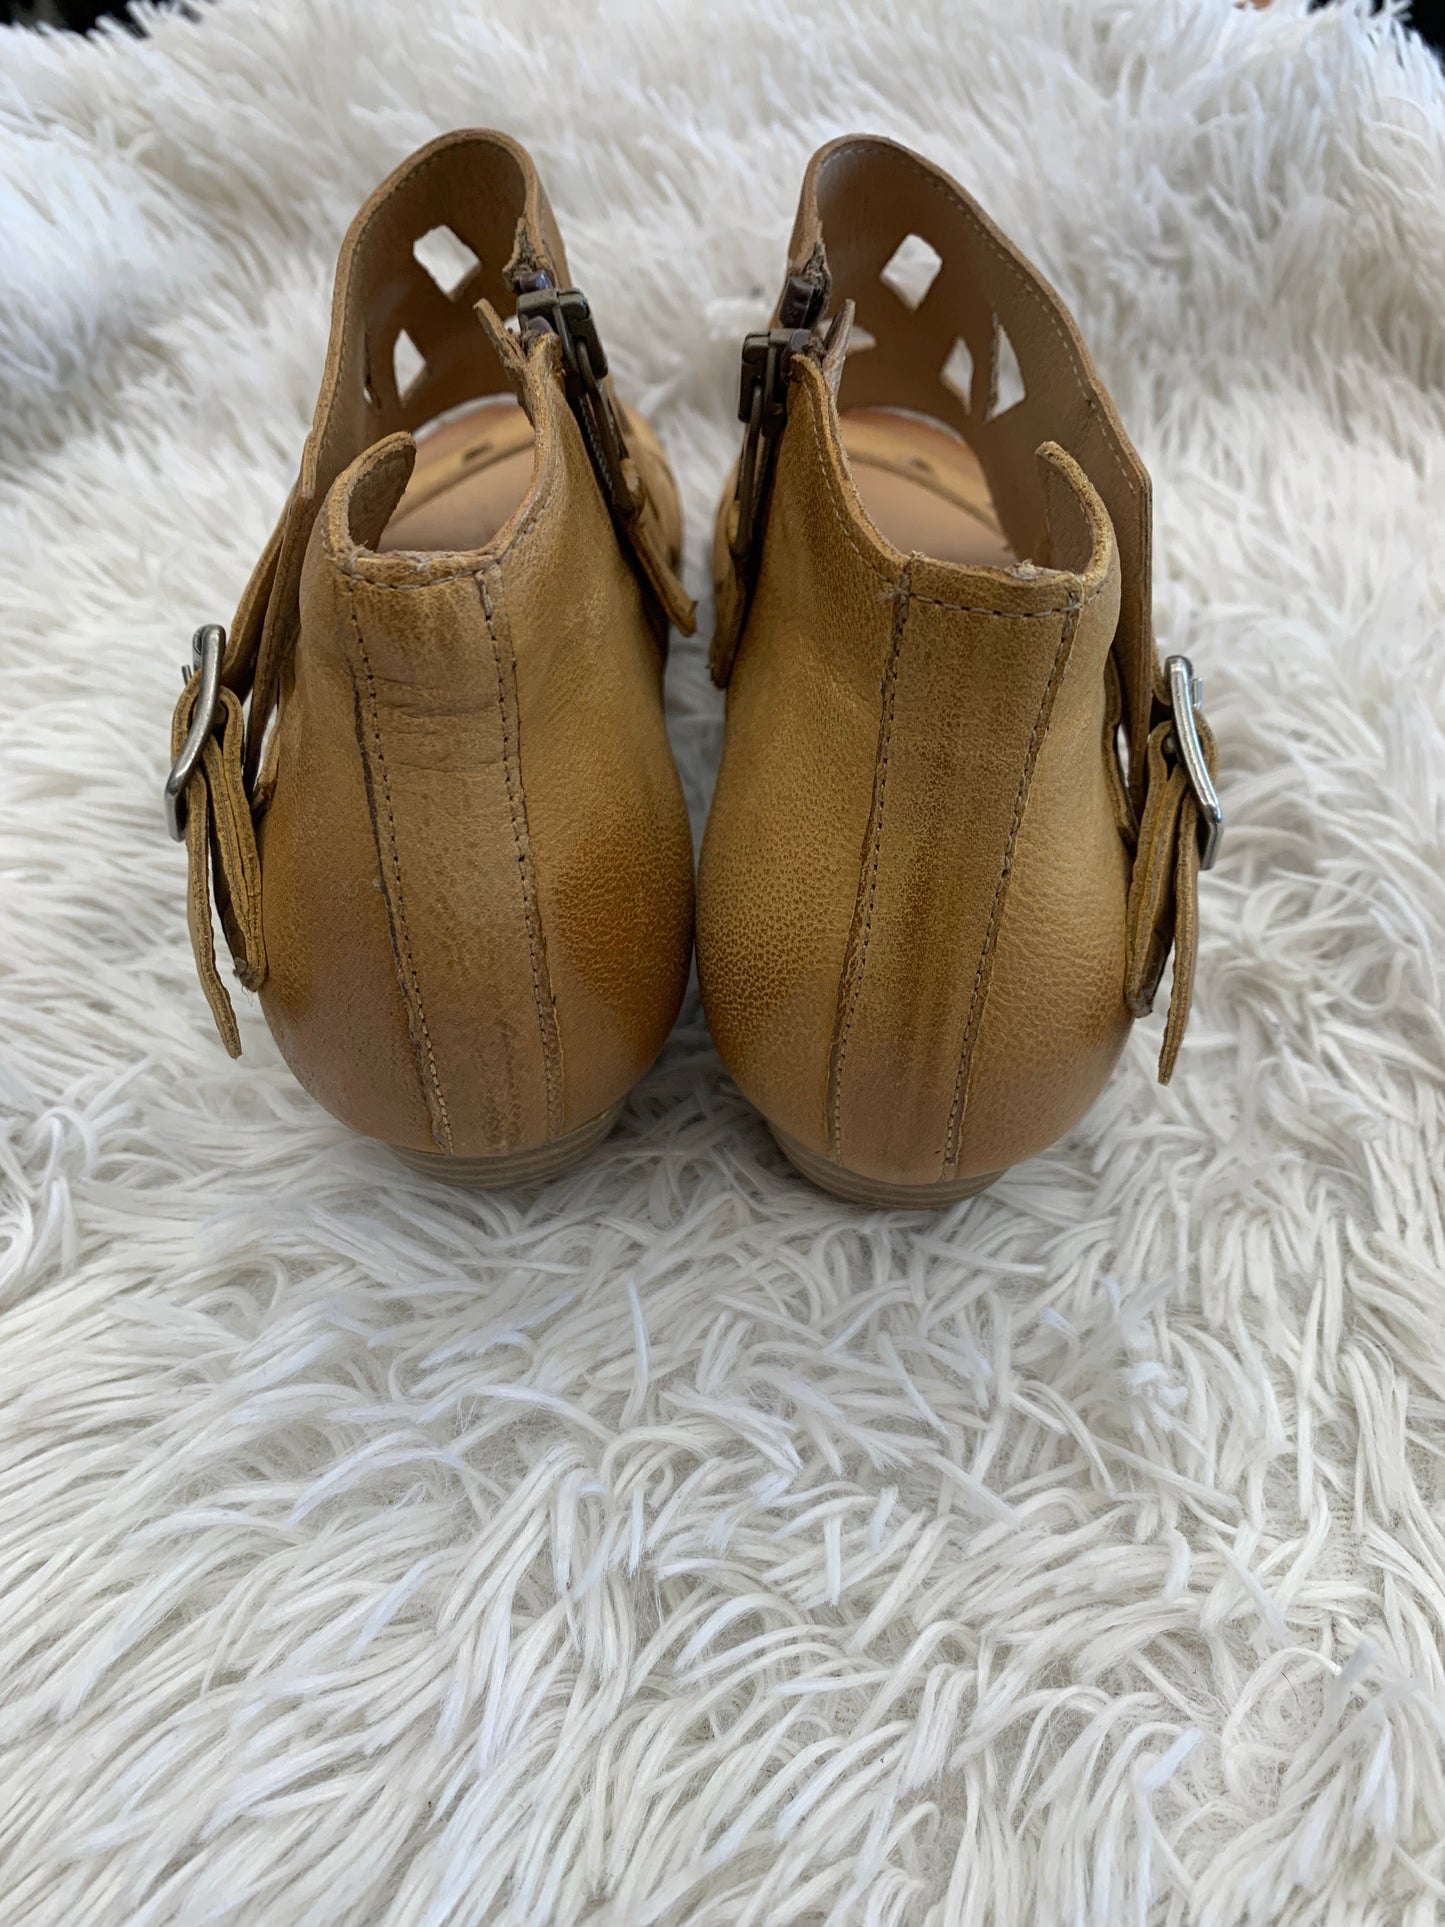 Tan Sandals Heels Block Miz Mooz, Size 6.5